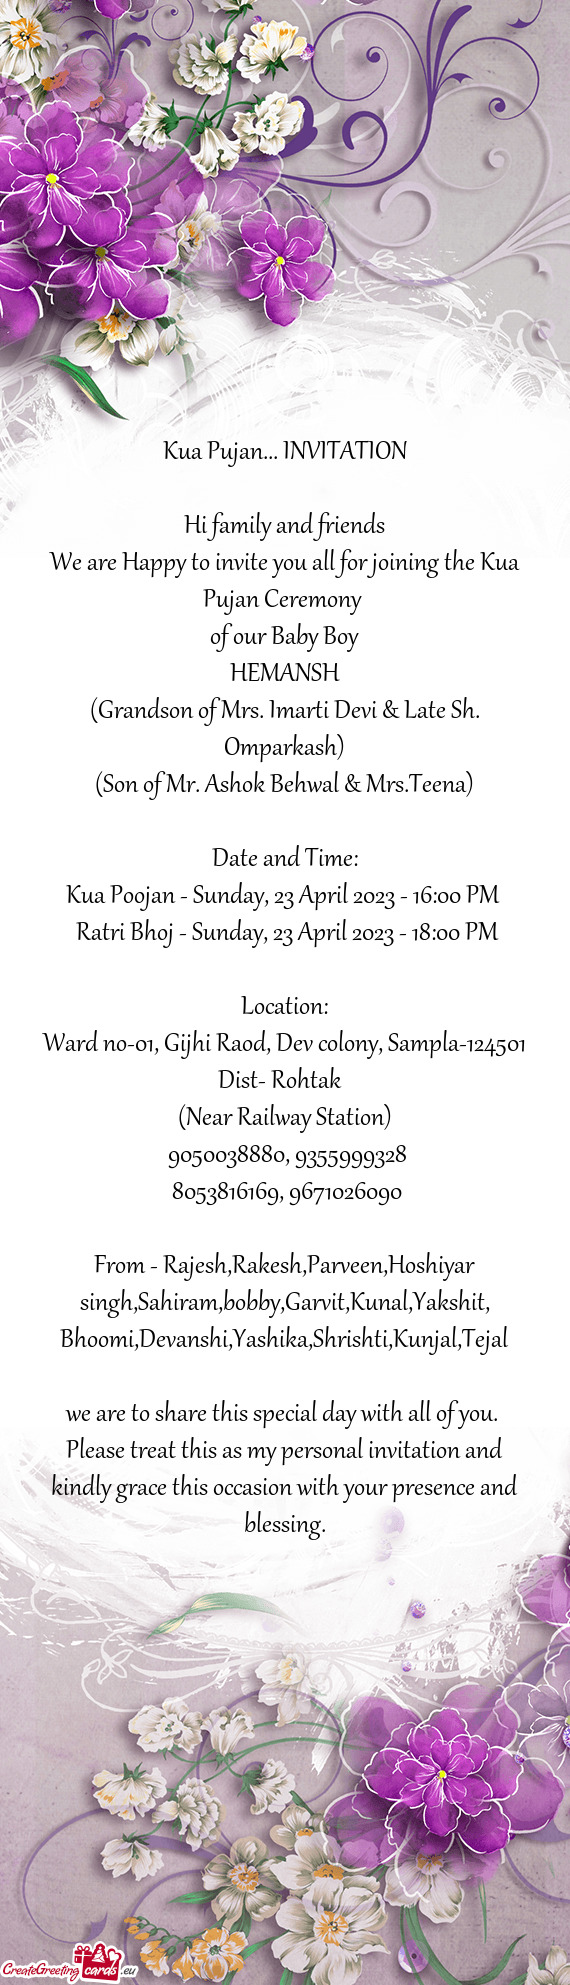 Ratri Bhoj - Sunday, 23 April 2023 - 18:00 PM